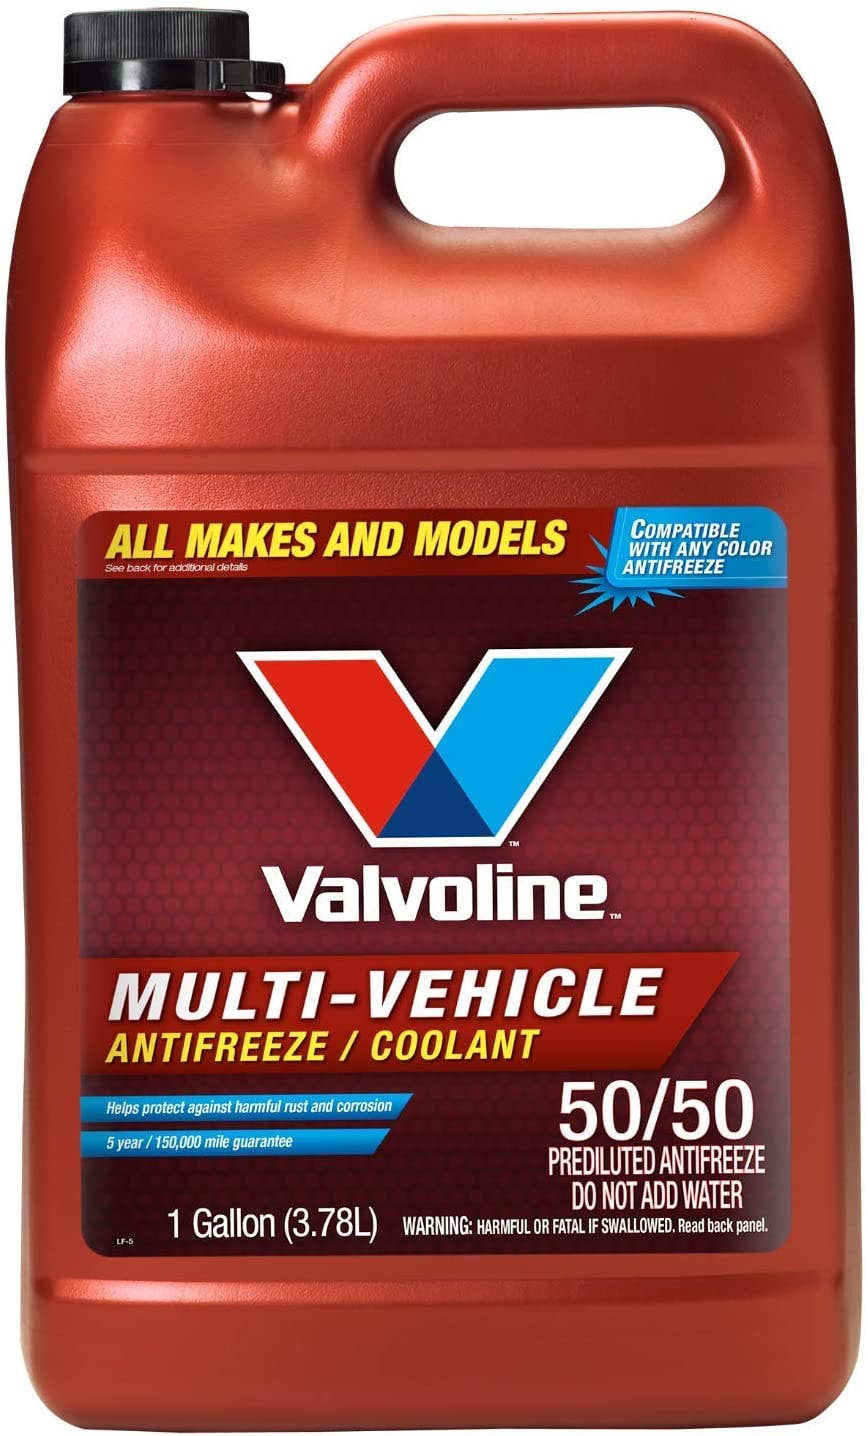 Valvoline Multi-Vehicle 50/50 Prediluted Ready-to-Use Antifreeze